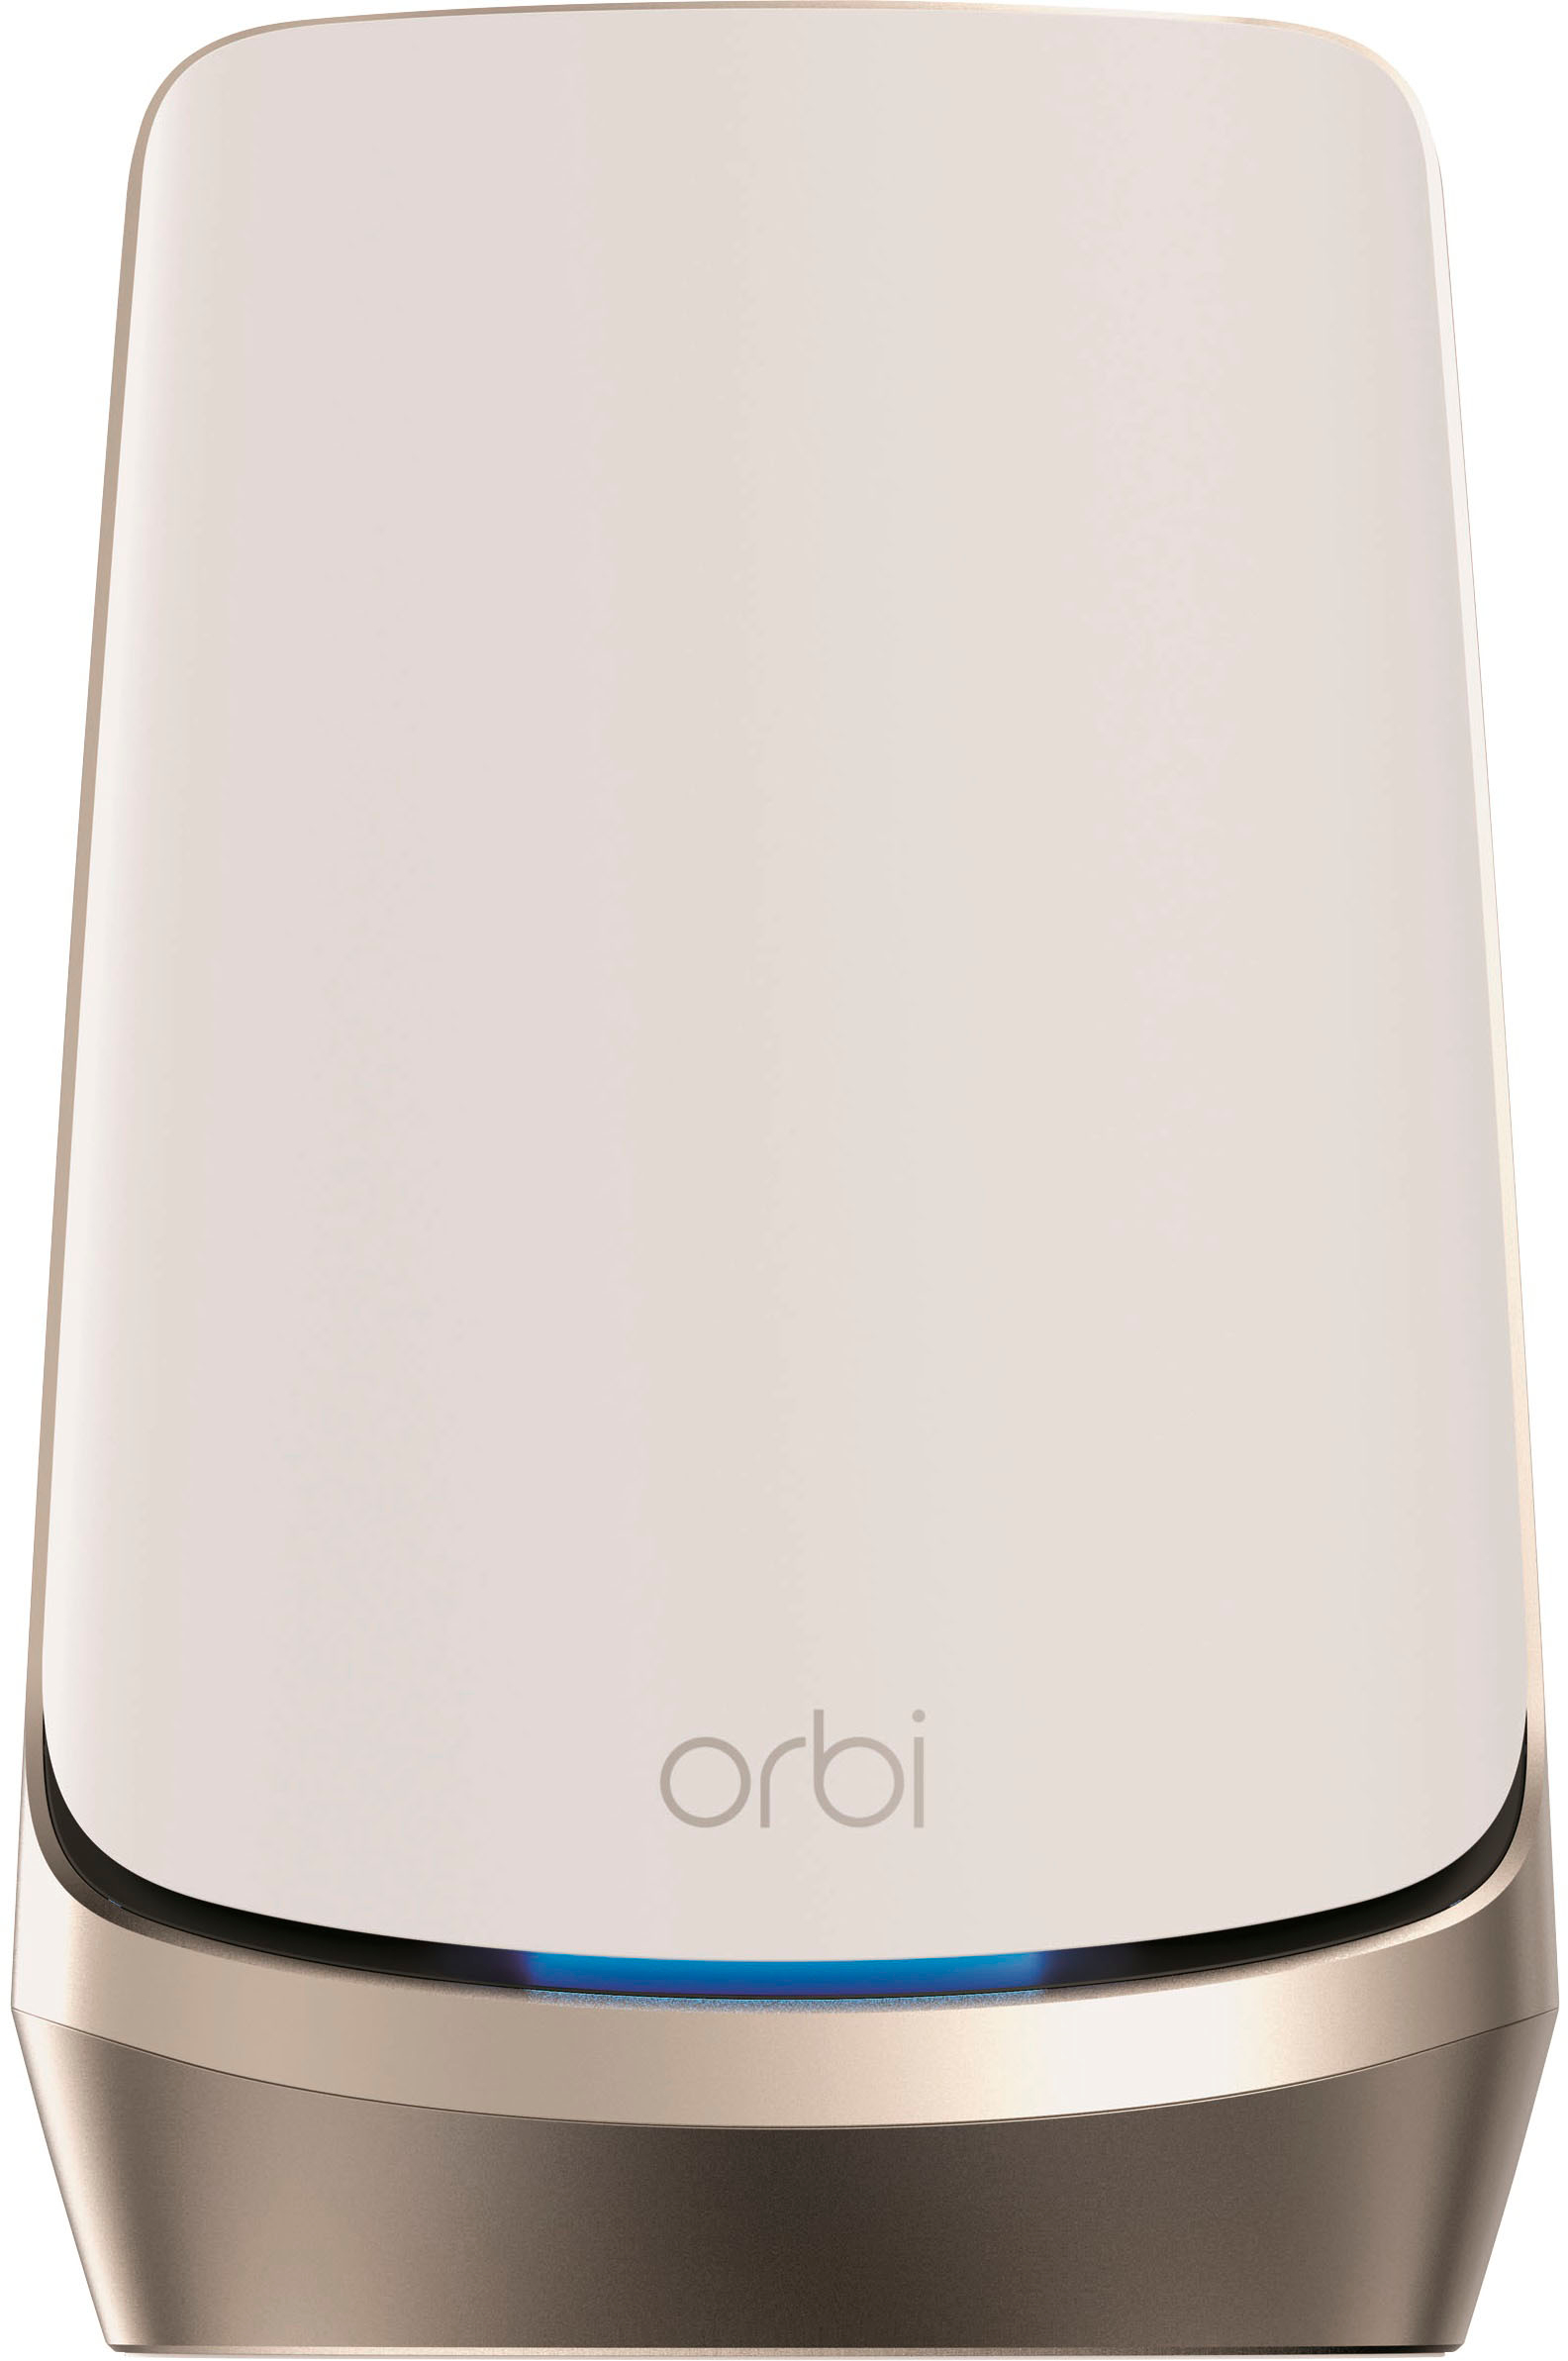 Netgear Orbi Quad-Band Mesh WiFi 6E System (RBKE963): Fast but